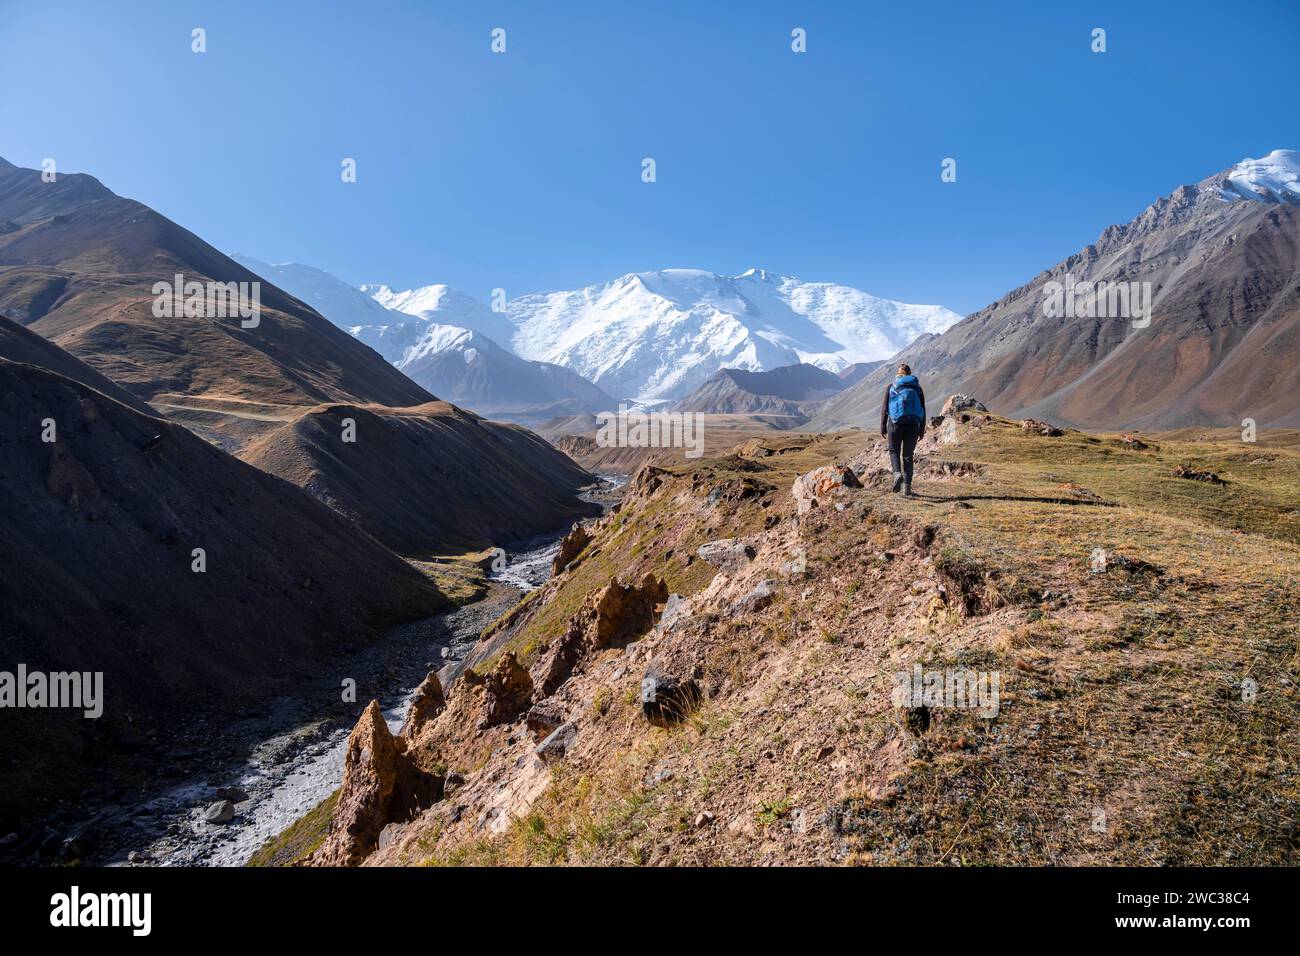 Wanderer im Tal mit dem Fluss Achik Tash zwischen hohen Bergen, Berglandschaft mit dem Gipfel Pik Lenin, Provinz Osh, Kirgisistan Stockfoto